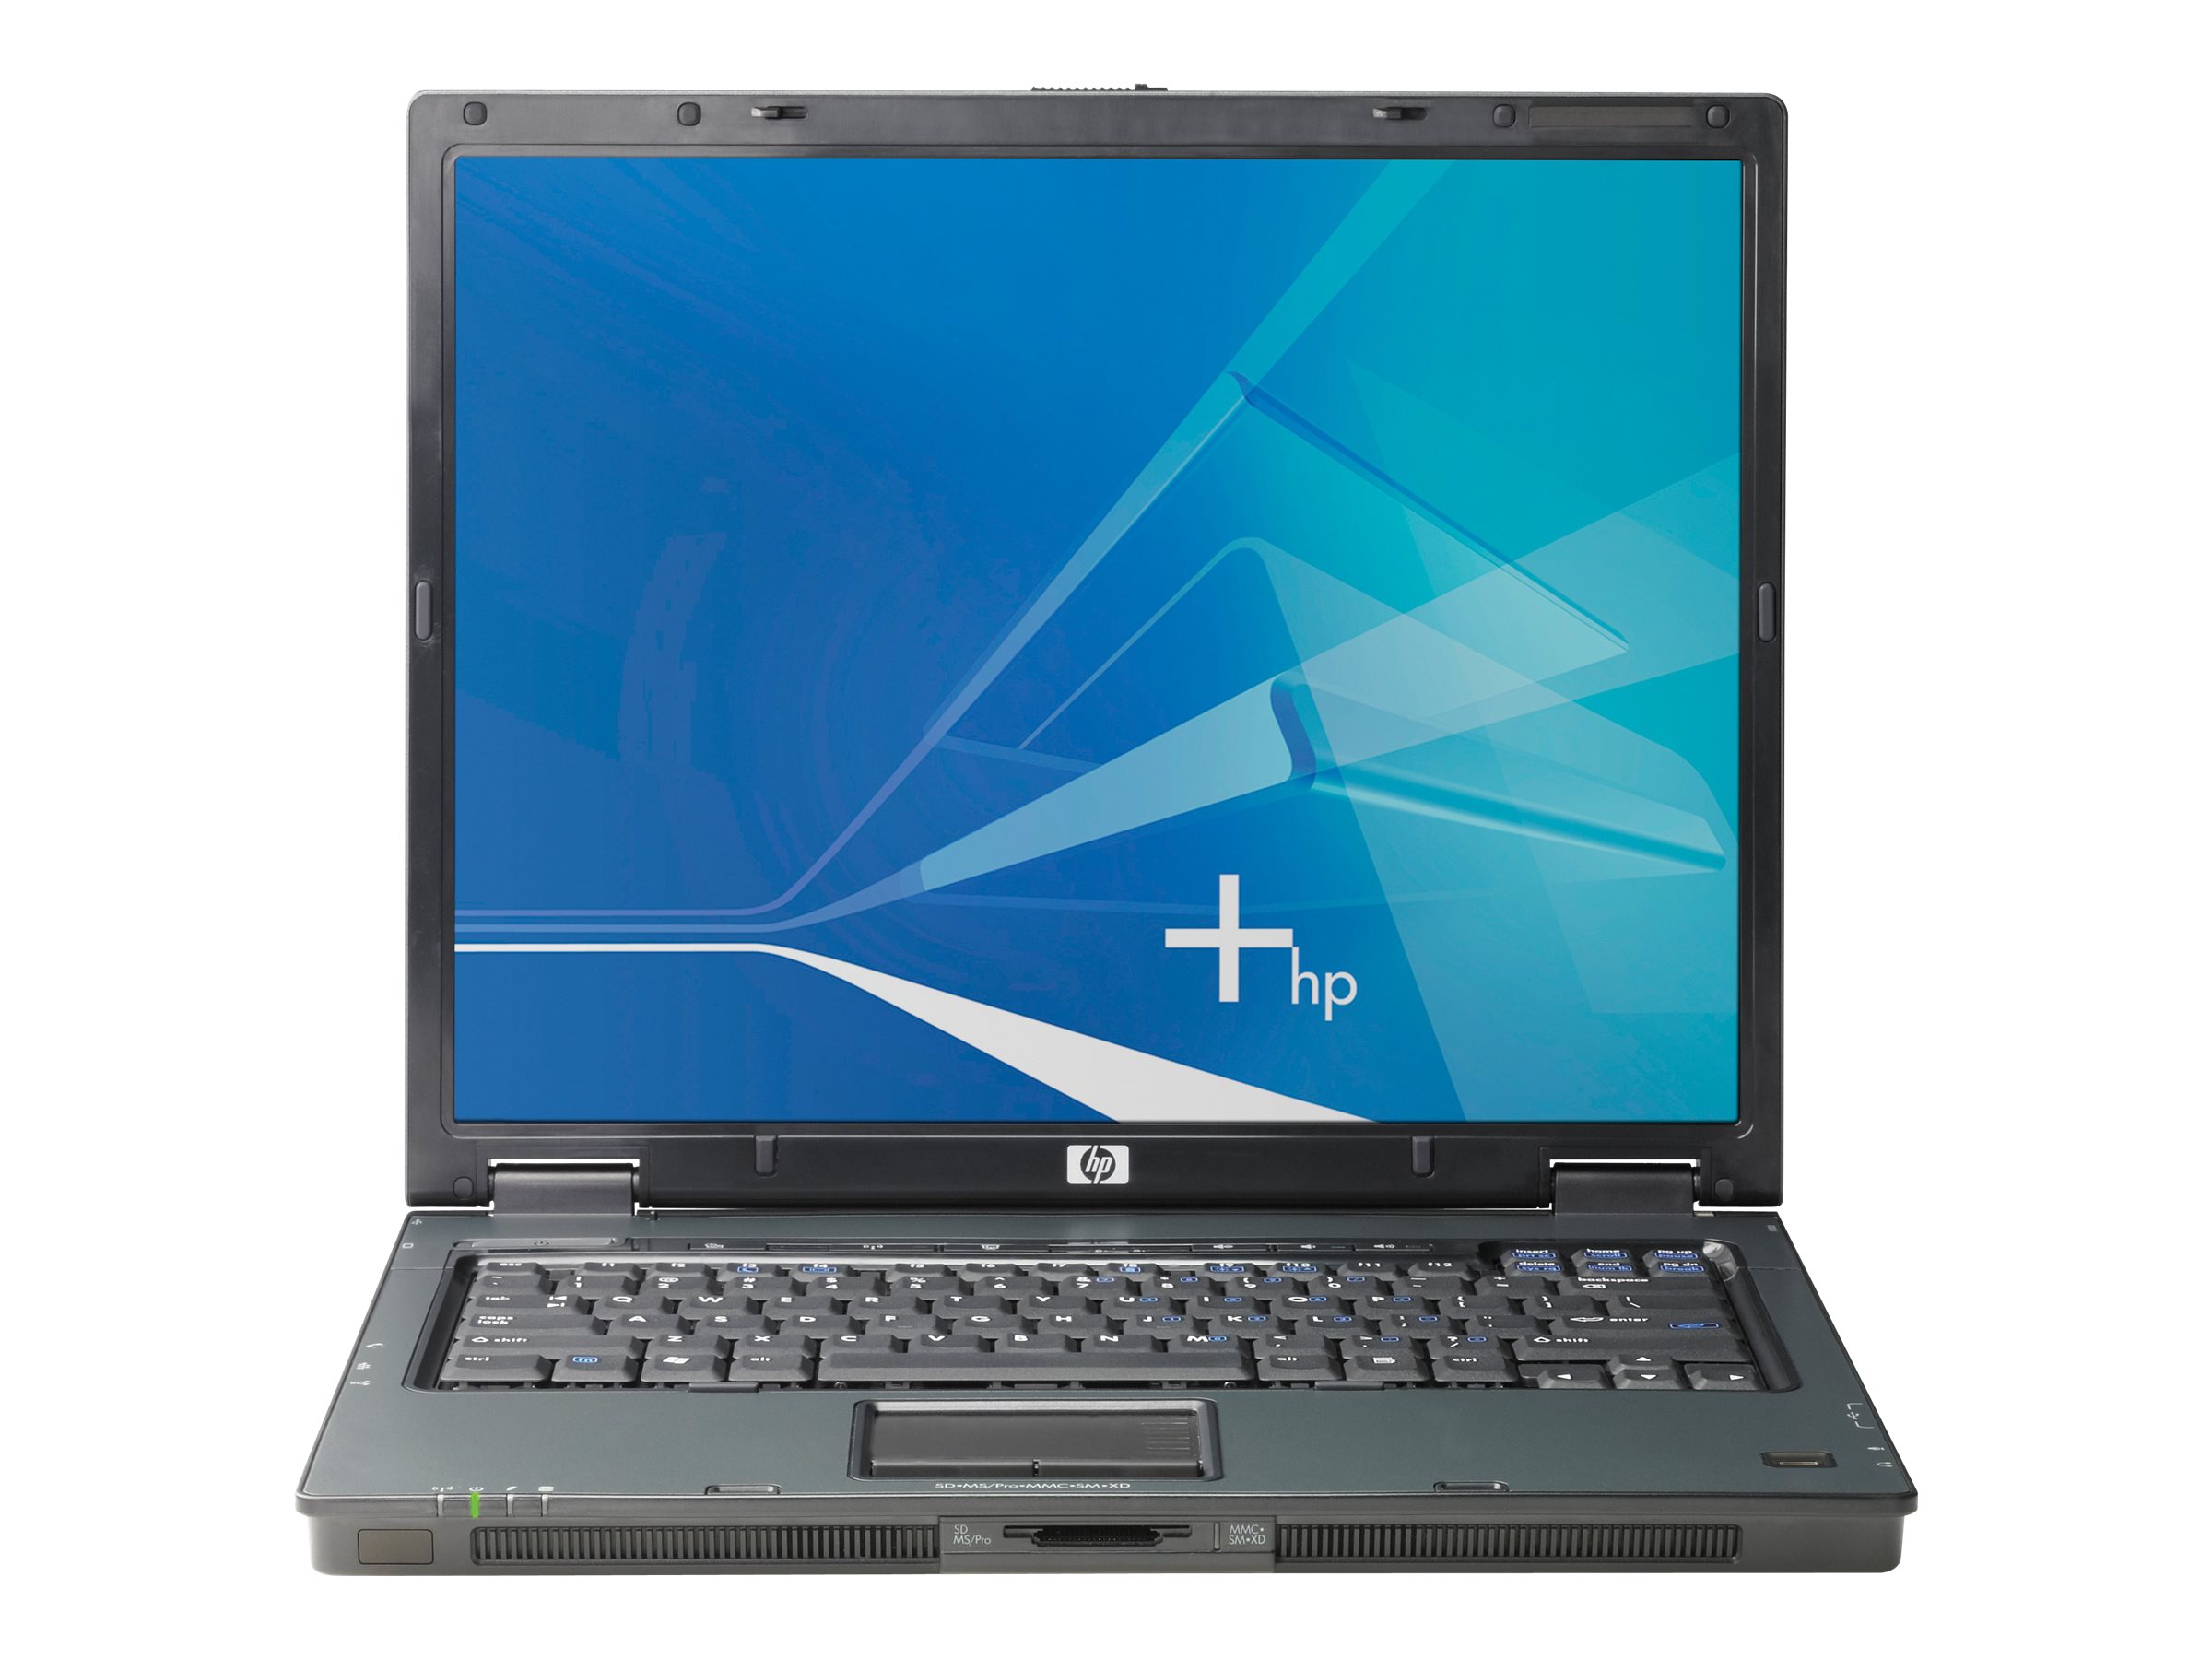 HP Compaq Business Notebook nc6120